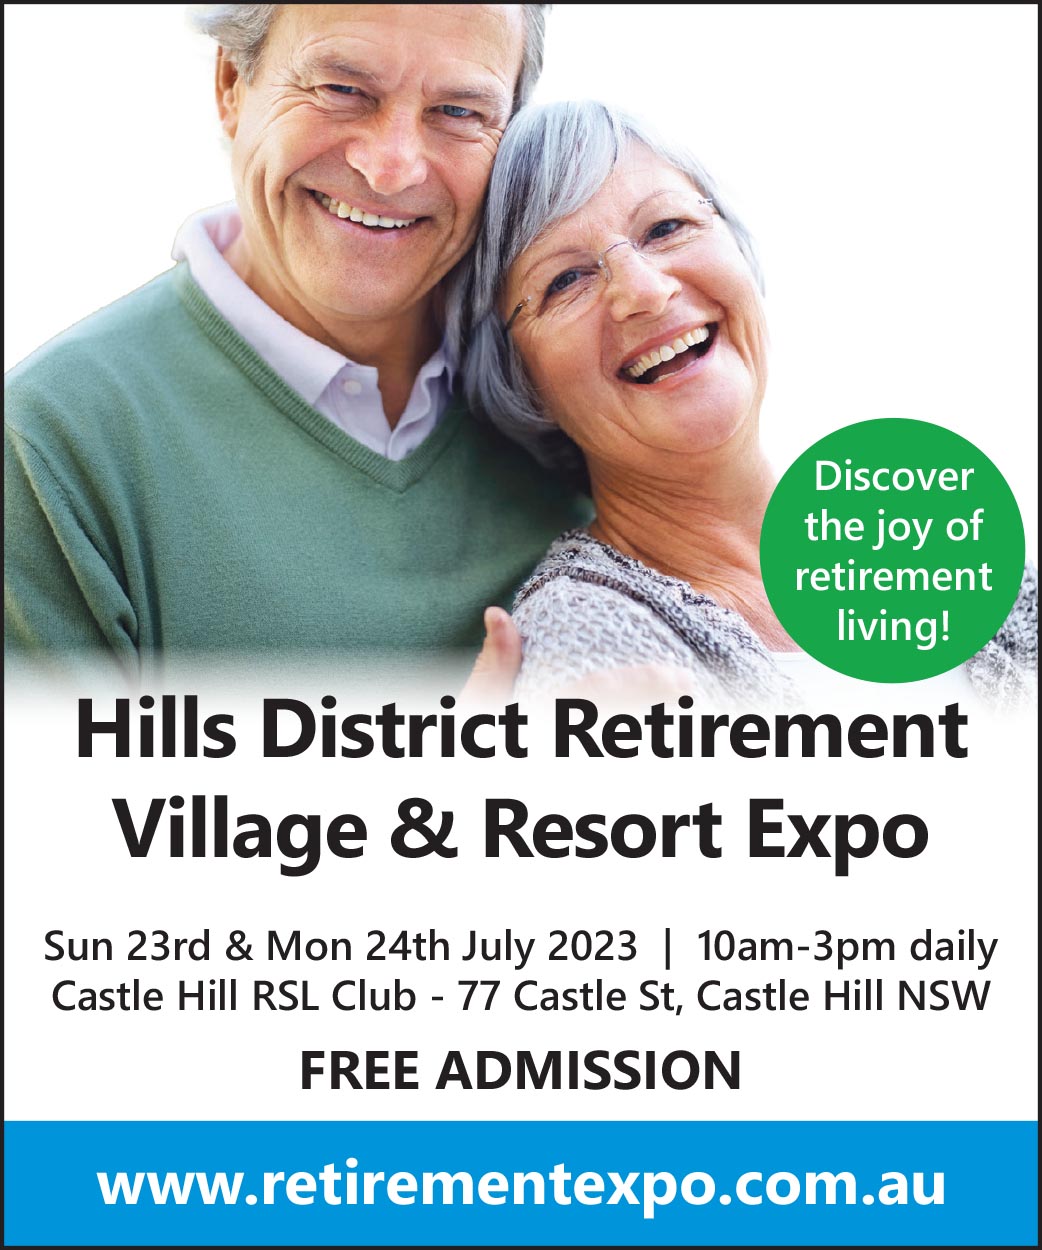 Hills District Retirement Village & Resort Expo